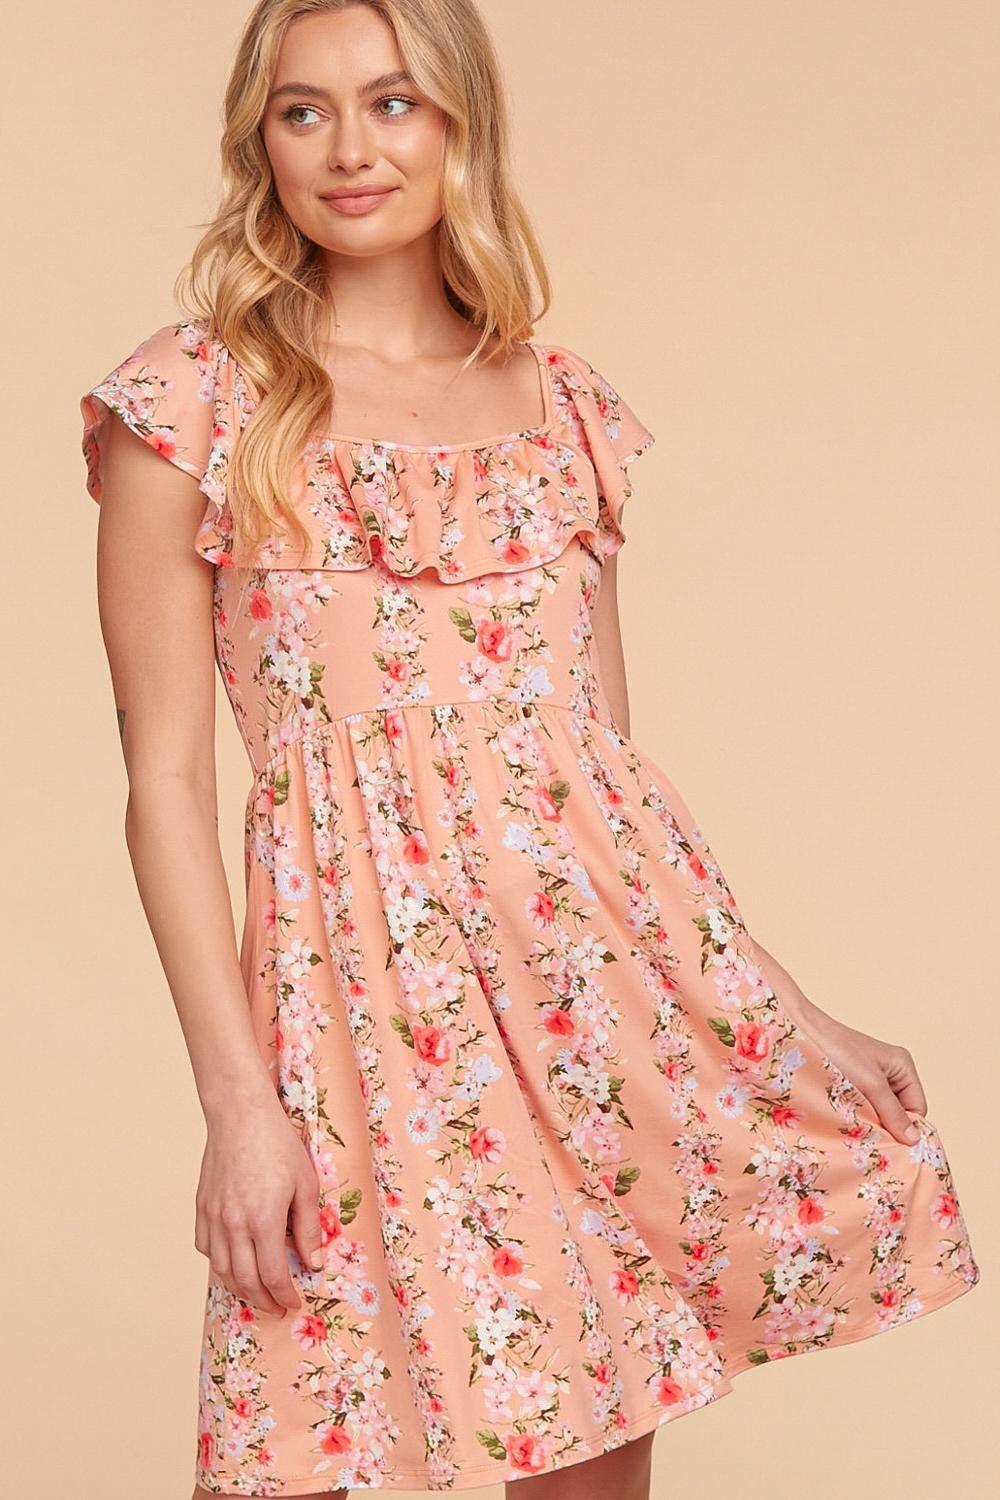 FINAL SALE - The Daphne Peach Floral Ruffled Swing Dress